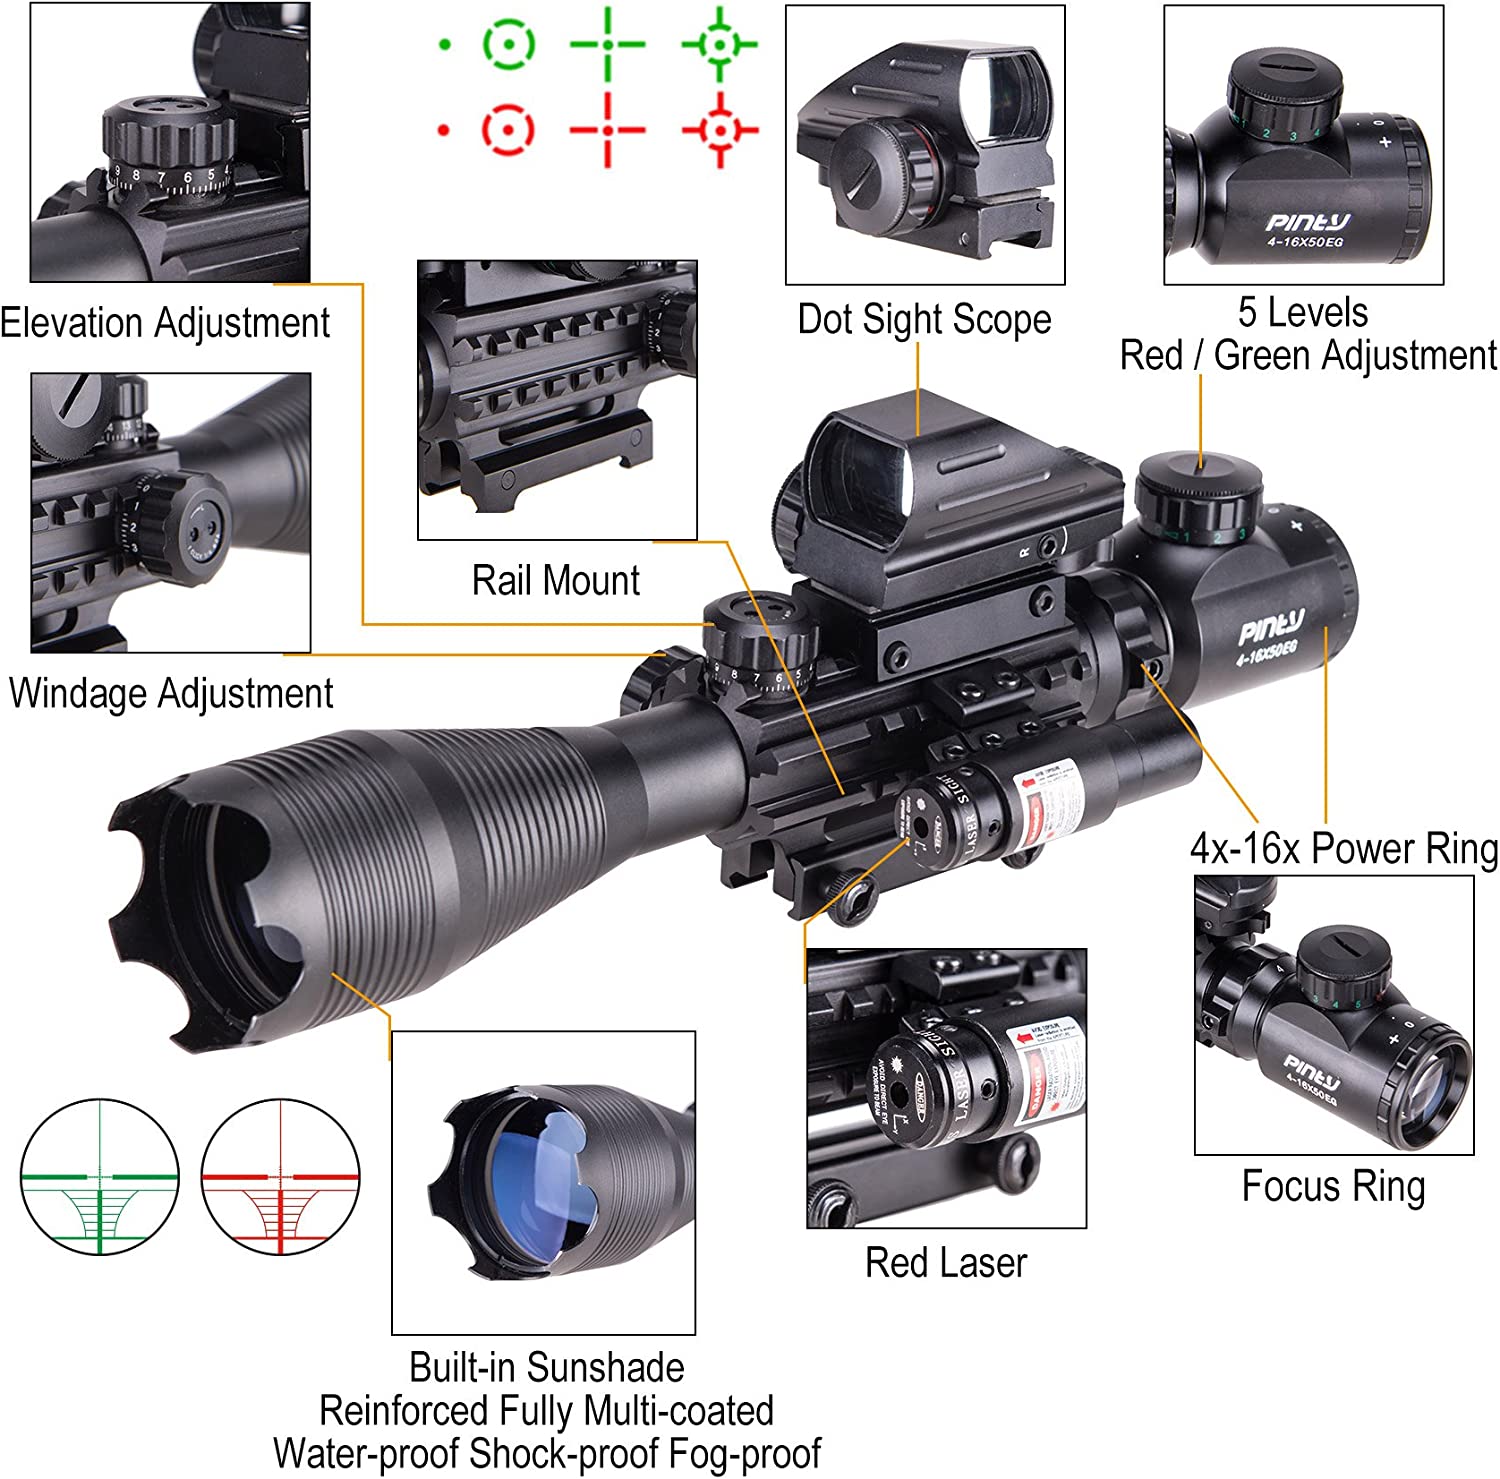 3 in 1 Scope Combo, 4-16x50EG Illuminated Rangefinder Rifle Scope, Red Laser